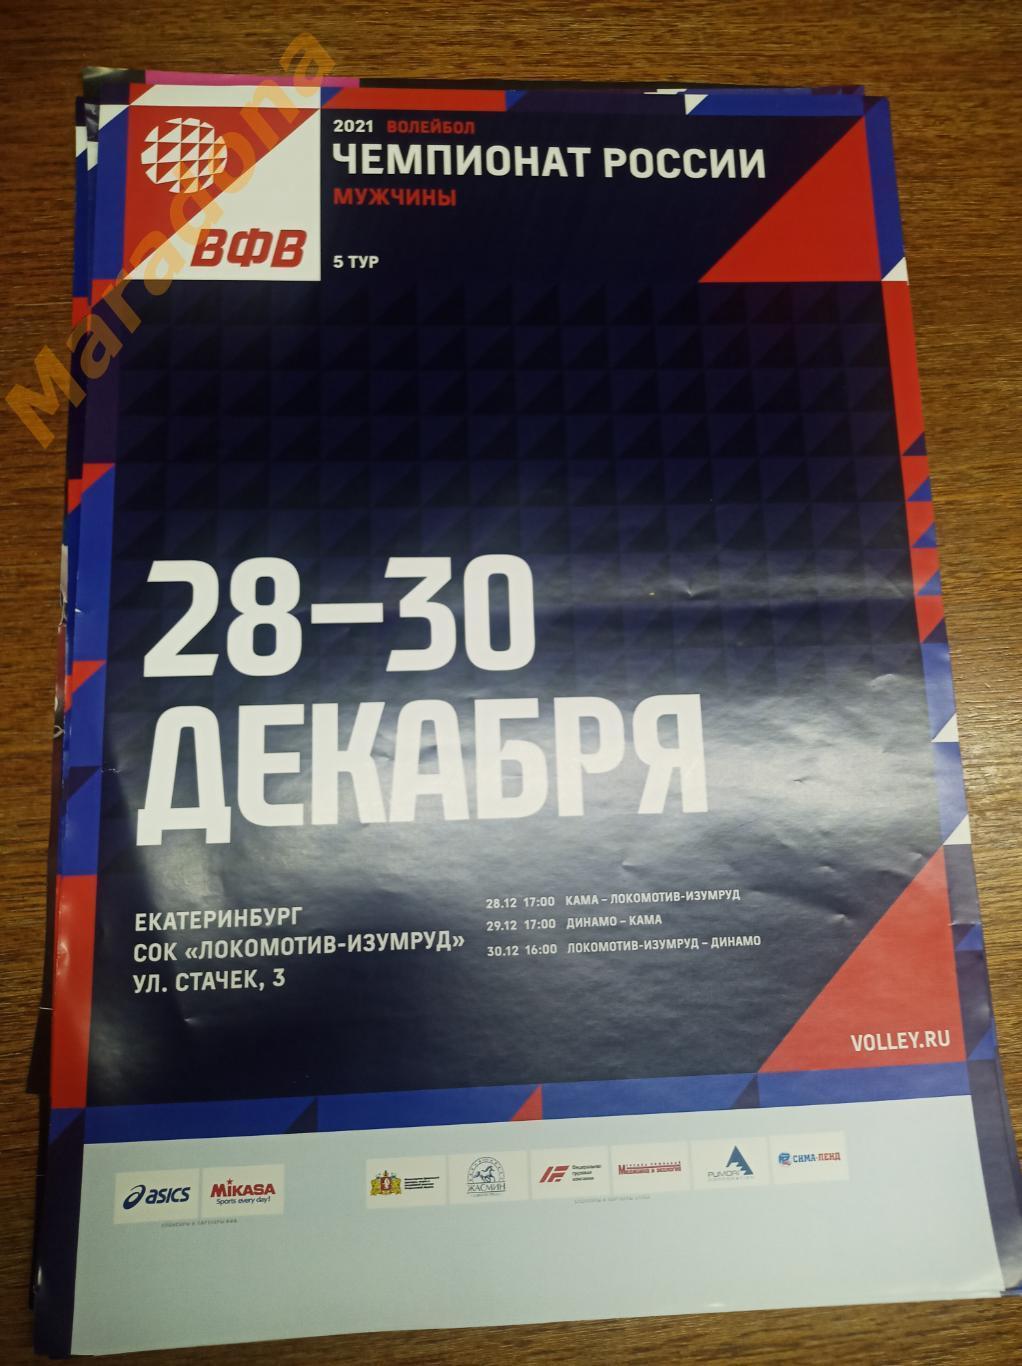 Локомотив-Изумруд Екатеринбург 2020/2021 Динамо Челябинск, Кама Пермь